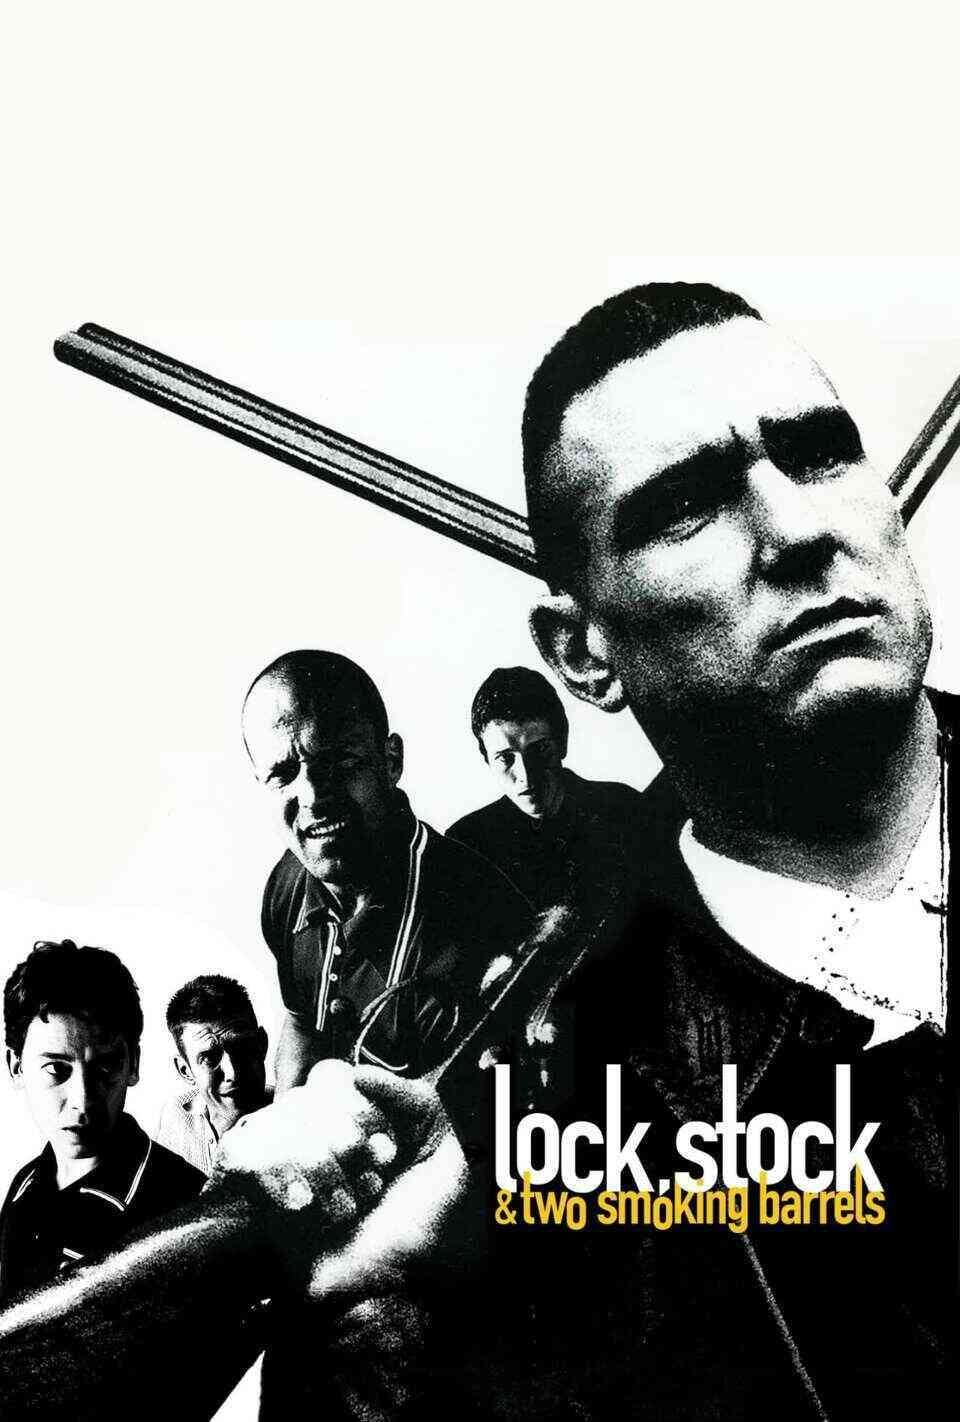 Read Lock, Stock and Two Smoking Barrels screenplay.